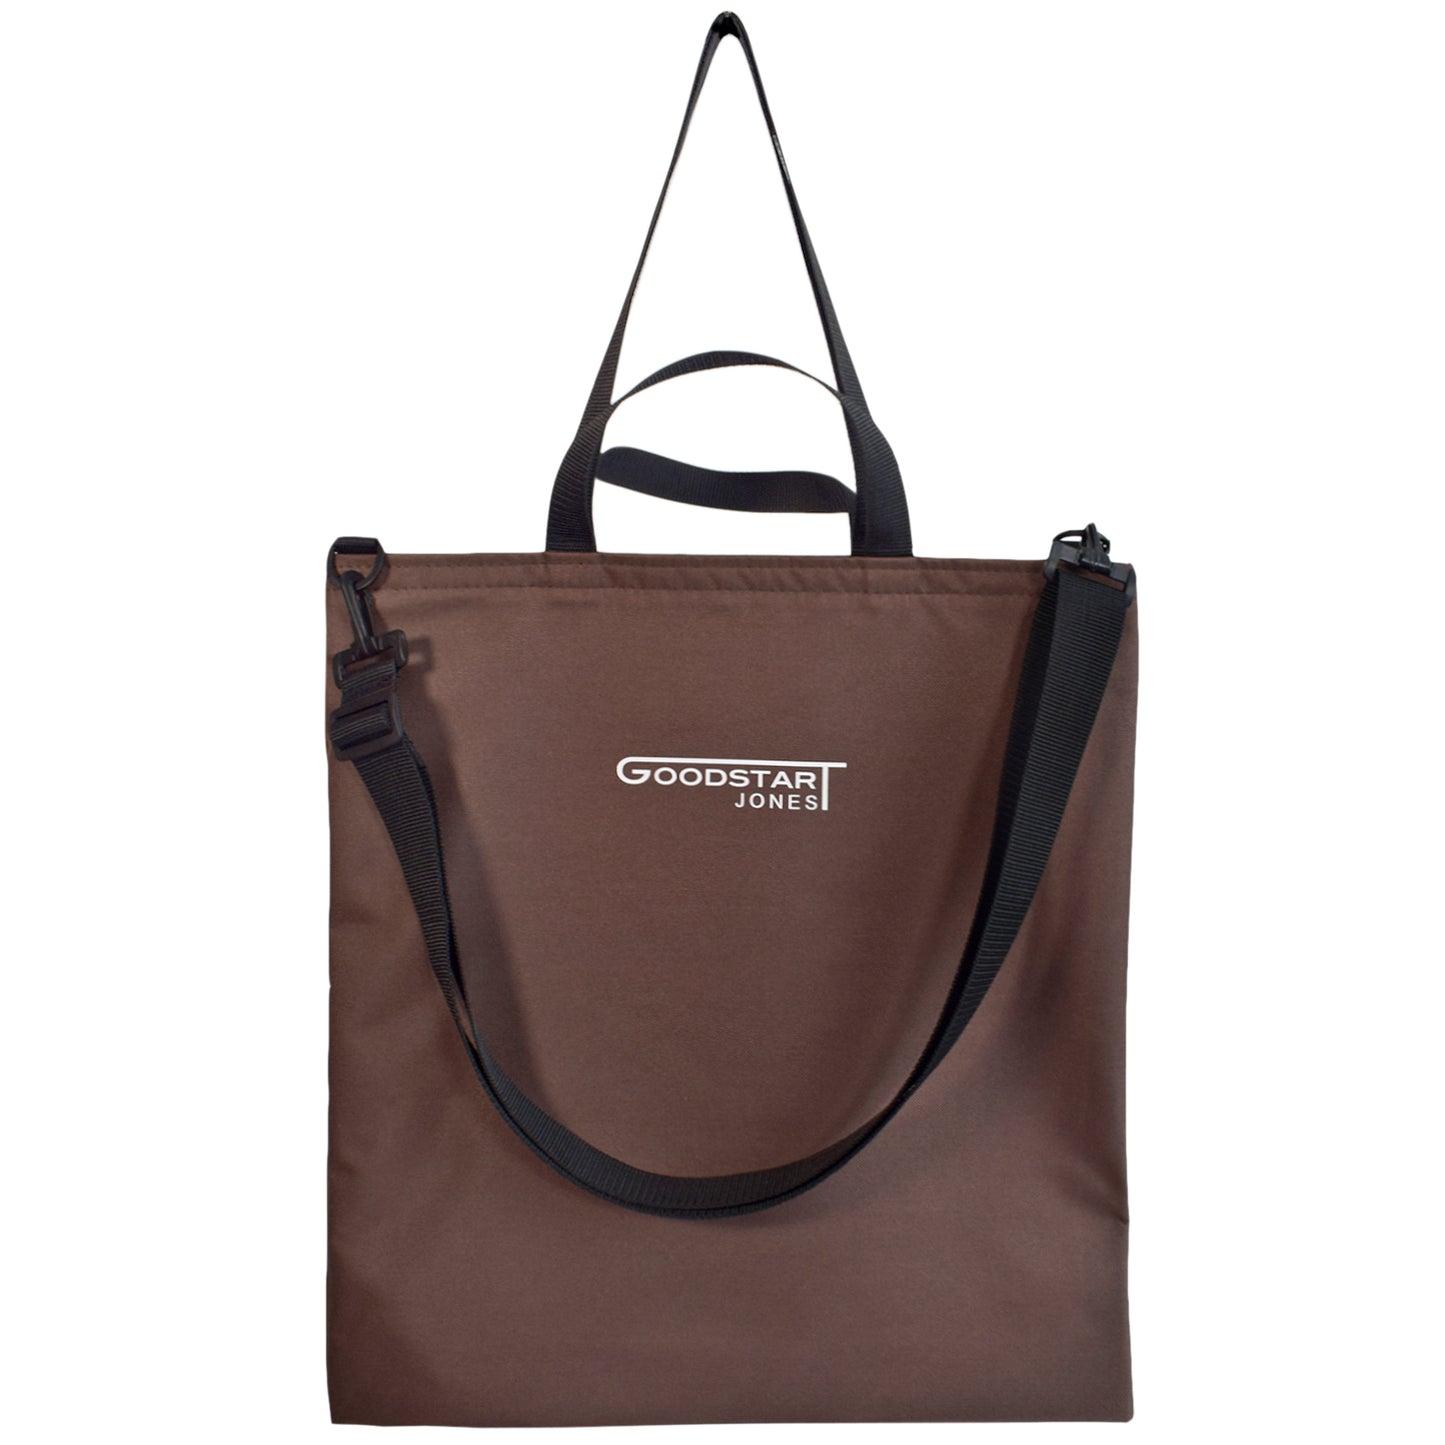 Brown front tote bag with long handles and Goodstart Jones logo 